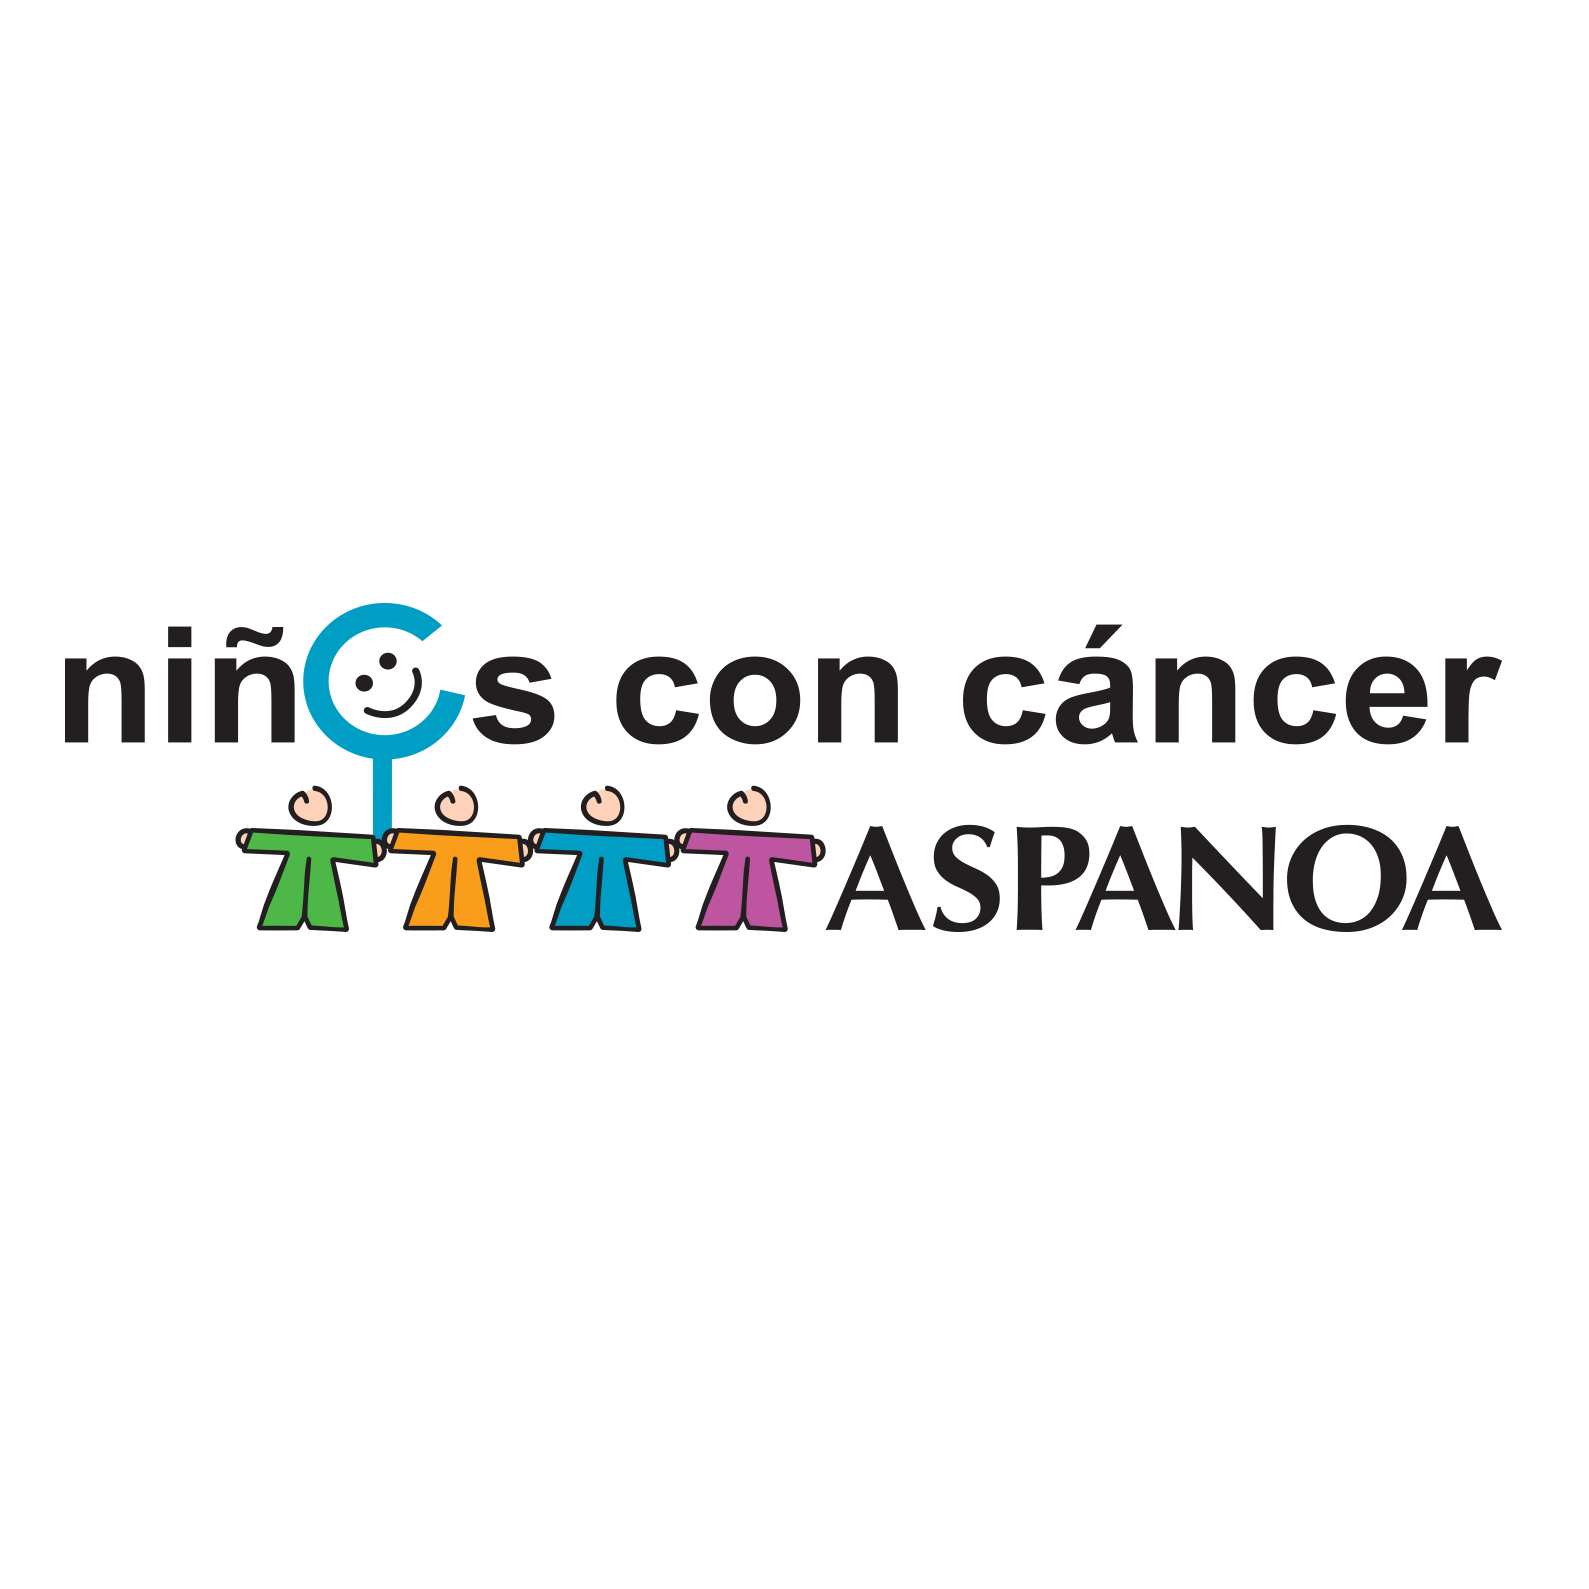 ASPANOA - Asociación de padres de niños con cáncer de Aragón Profile, news, ratings and communication